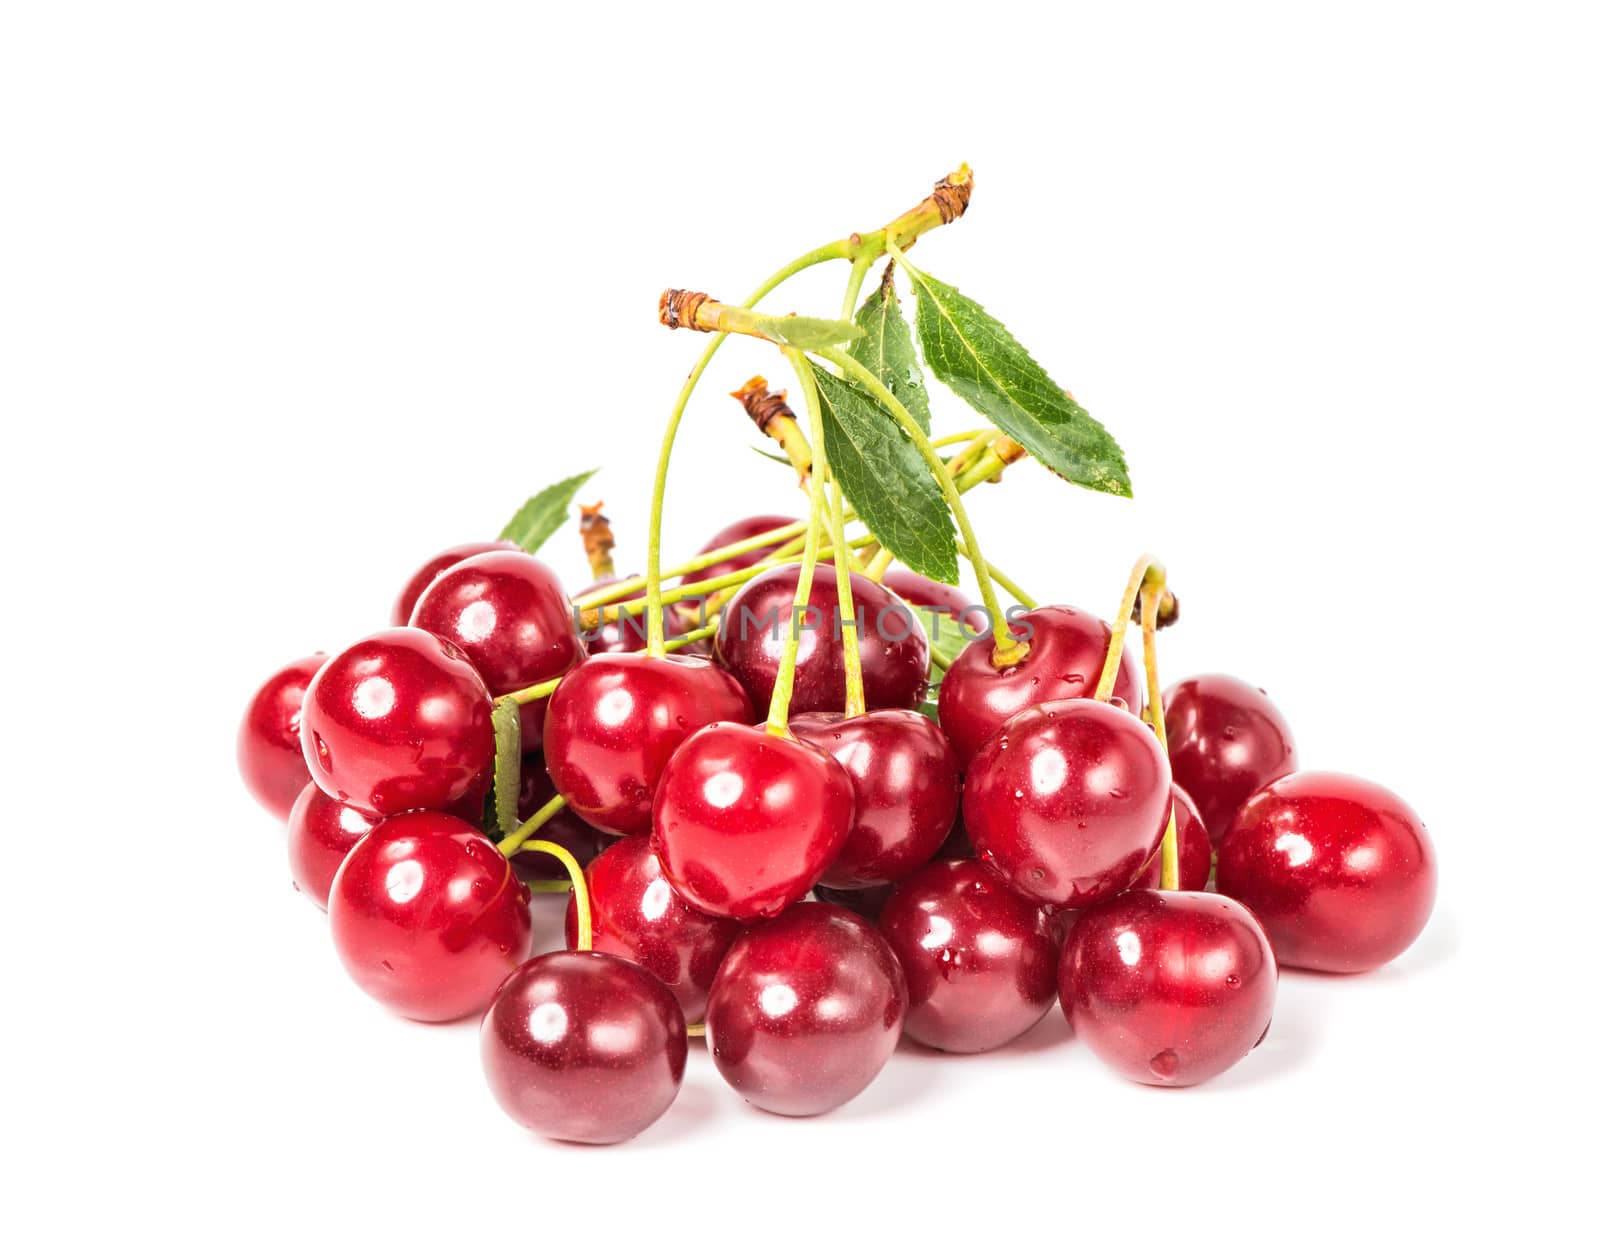 Sweet juicy cherry on white background isolated